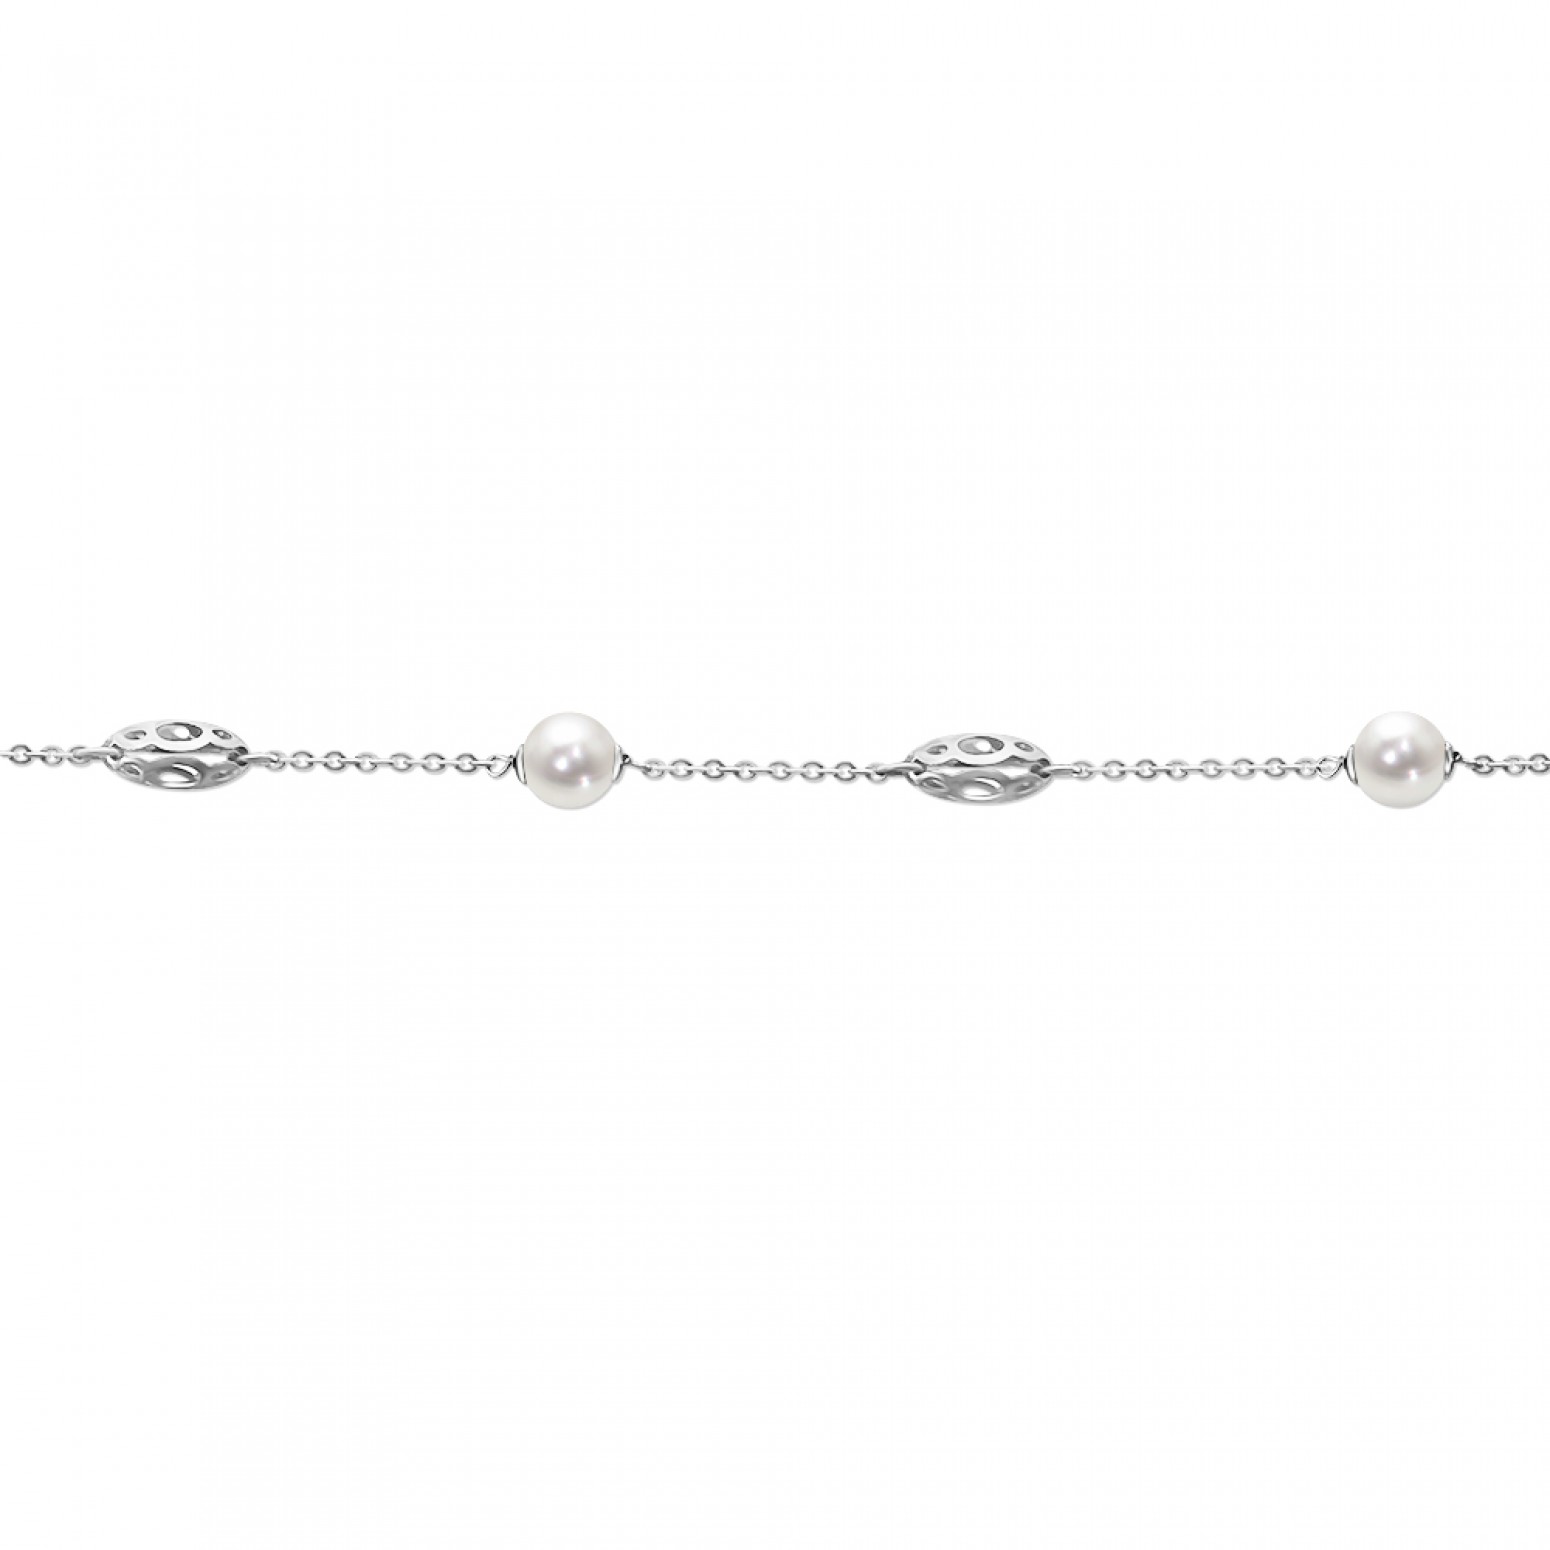 Bracelet Κ14 white gold with pearls, br0633 BRACELETS Κοσμηματα - chrilia.gr